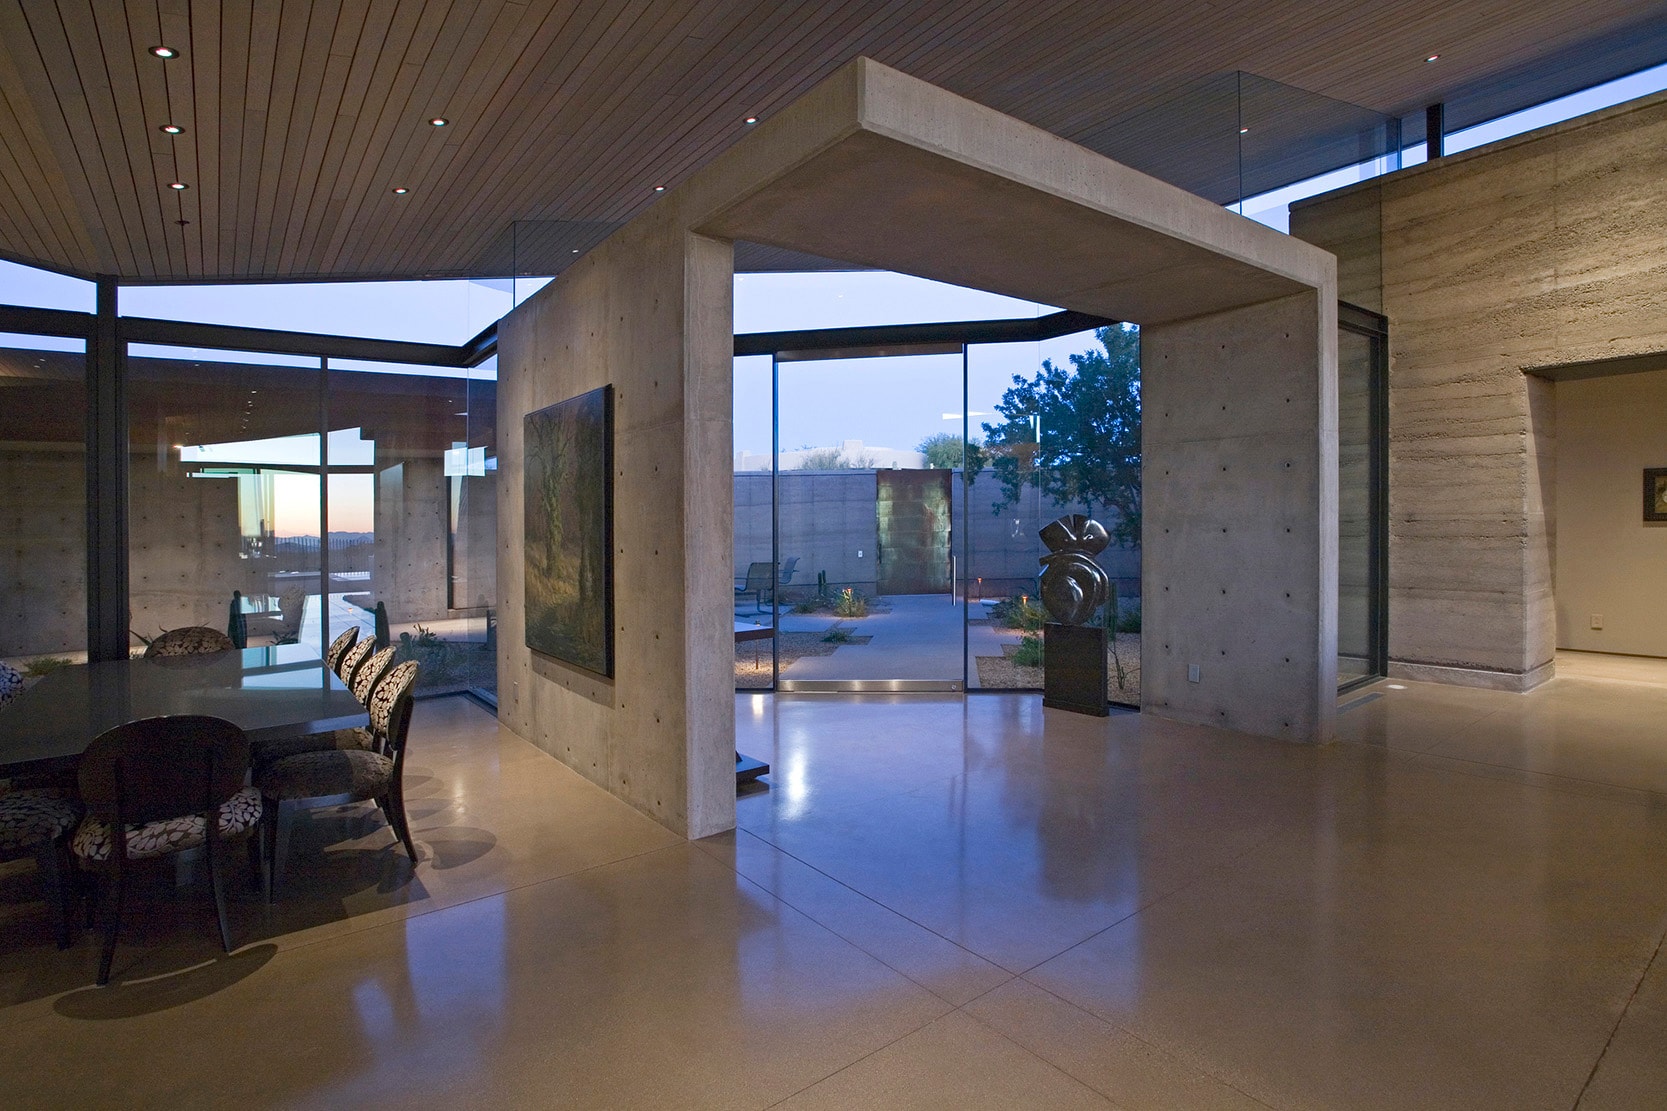 Desert Wing Kendle Design Collaborative Architecture Modern Interior Exterior Design Houses Homes Scottsdale United States America Swimming Pool Desert